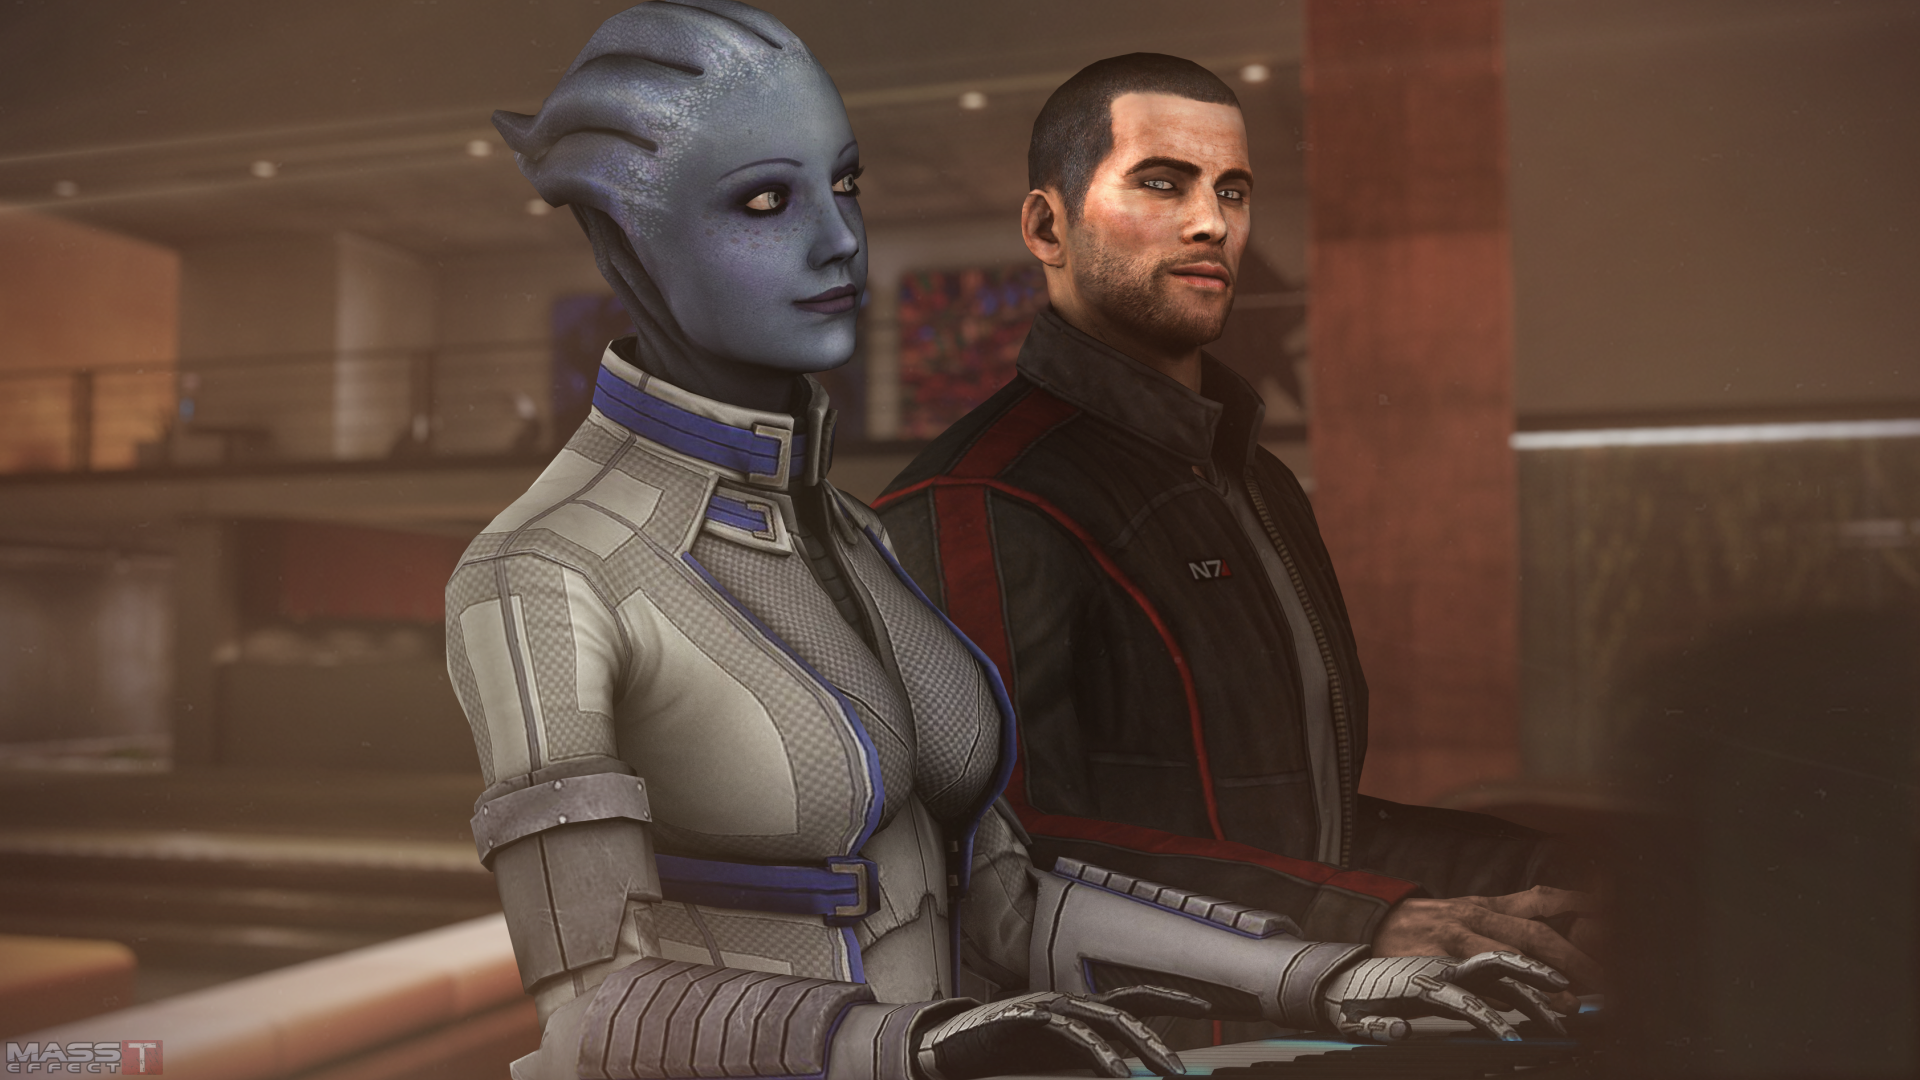 General 1920x1080 Liara T'Soni Commander Shepard video games Mass Effect PC gaming video game men video game girls Science Fiction Men science fiction women science fiction